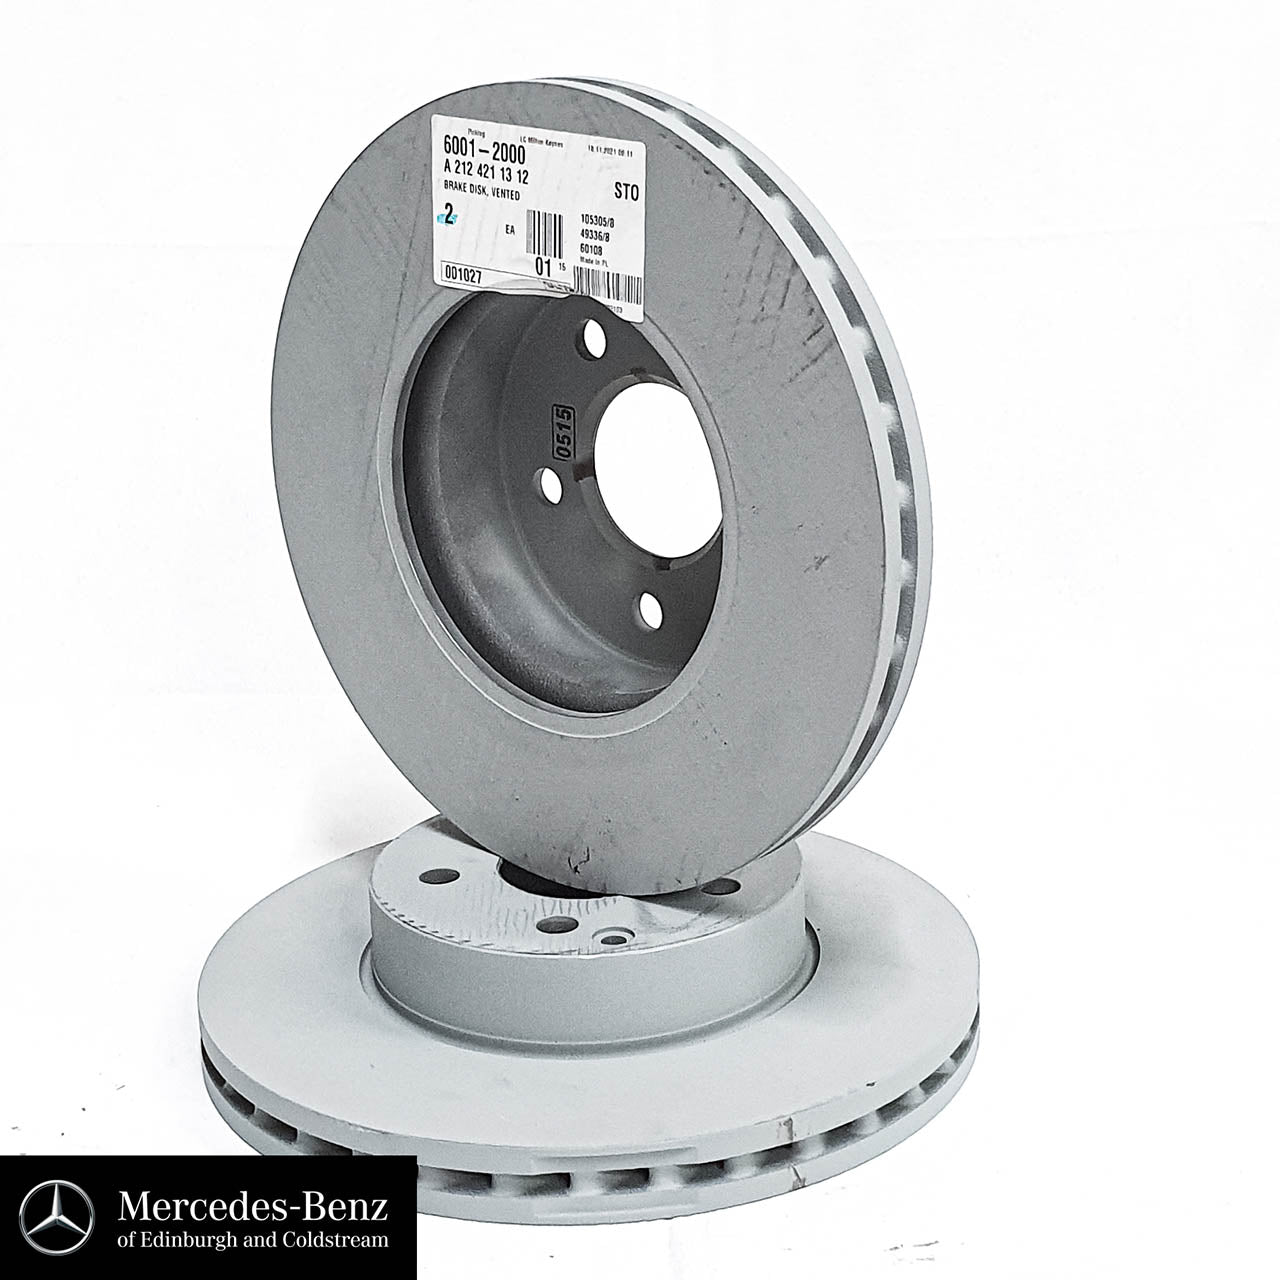 Genuine Mercedes-Benz brake disc set - Front - E Class 212 models